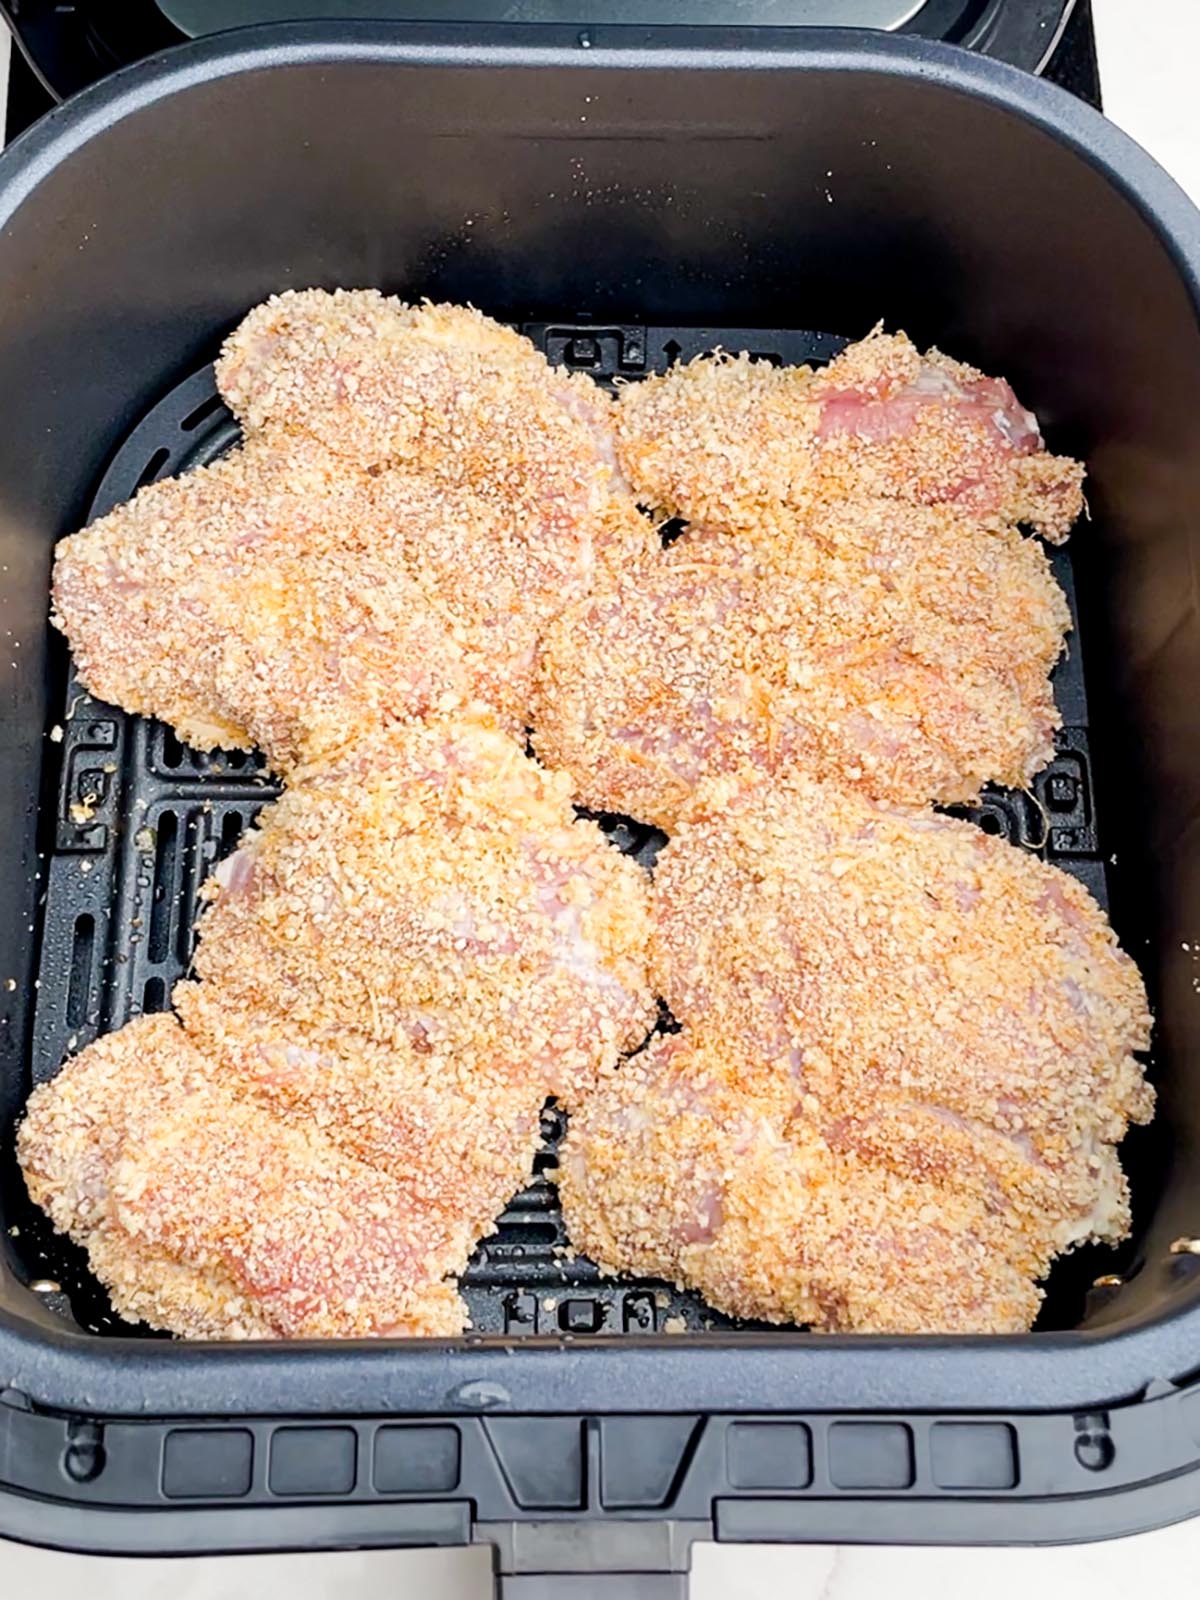 panko coated boneless chicken thighs in air fryer